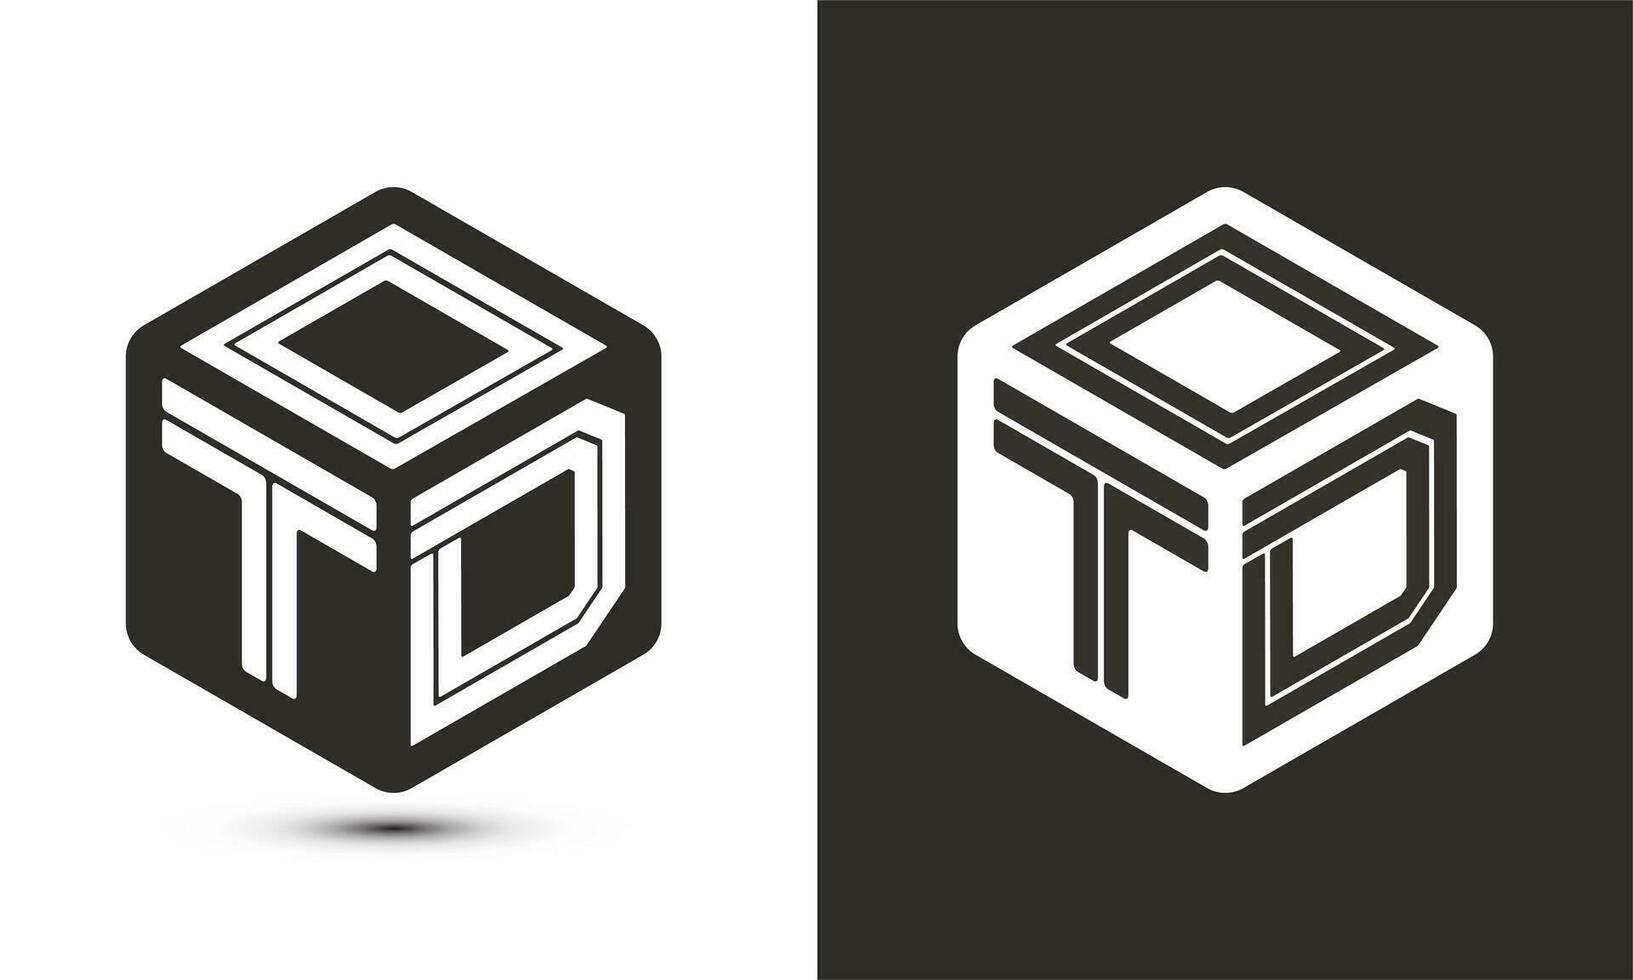 otd brief logo ontwerp met illustrator kubus logo, vector logo modern alfabet doopvont overlappen stijl.